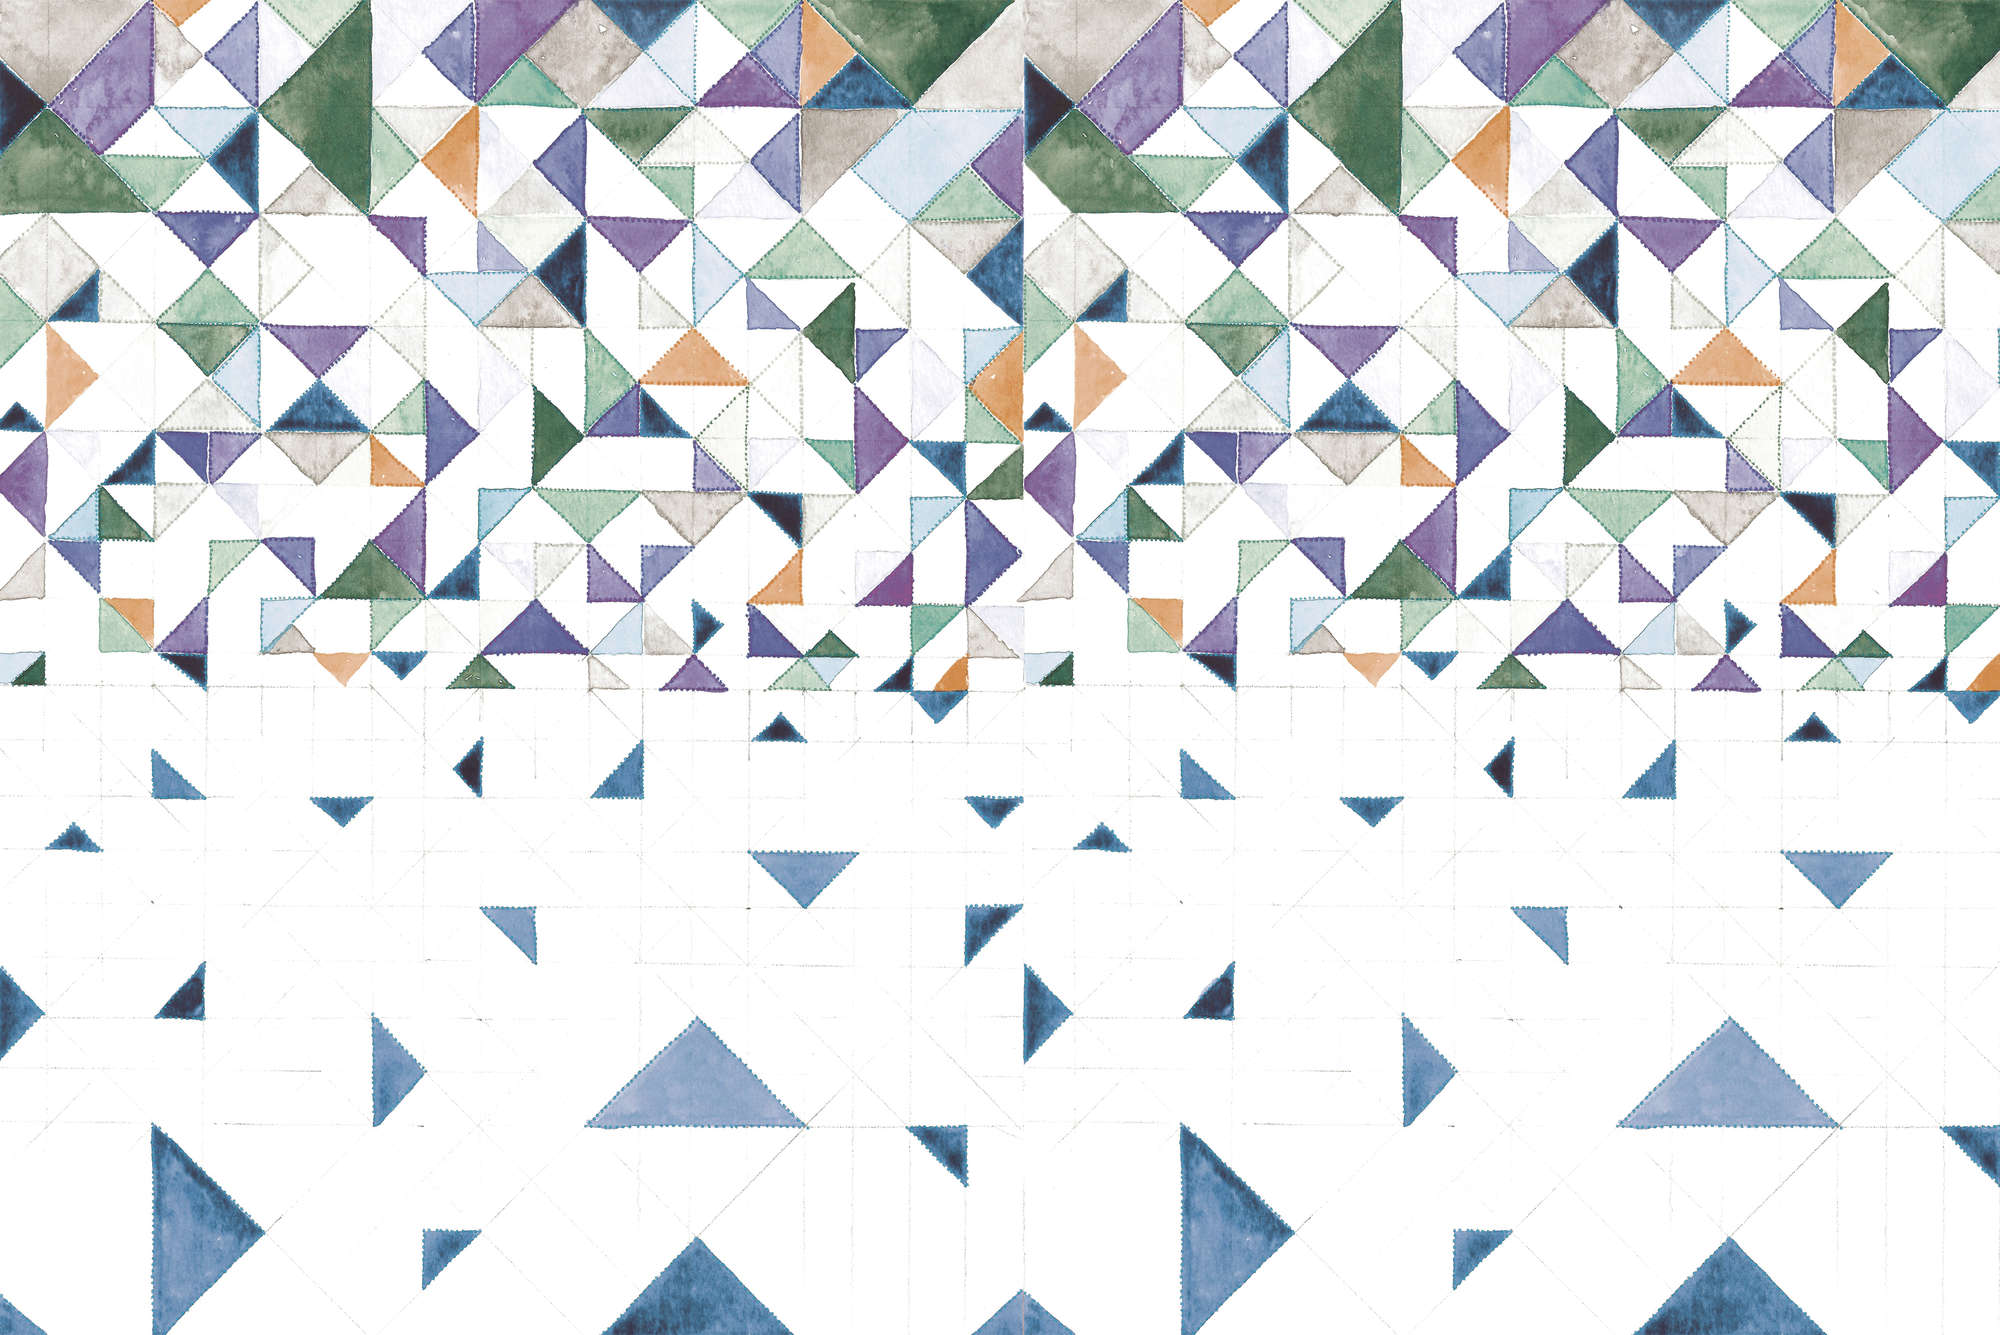             Grafik Fototapete mit Dreieck Muster auf Matt Glattvlies
        